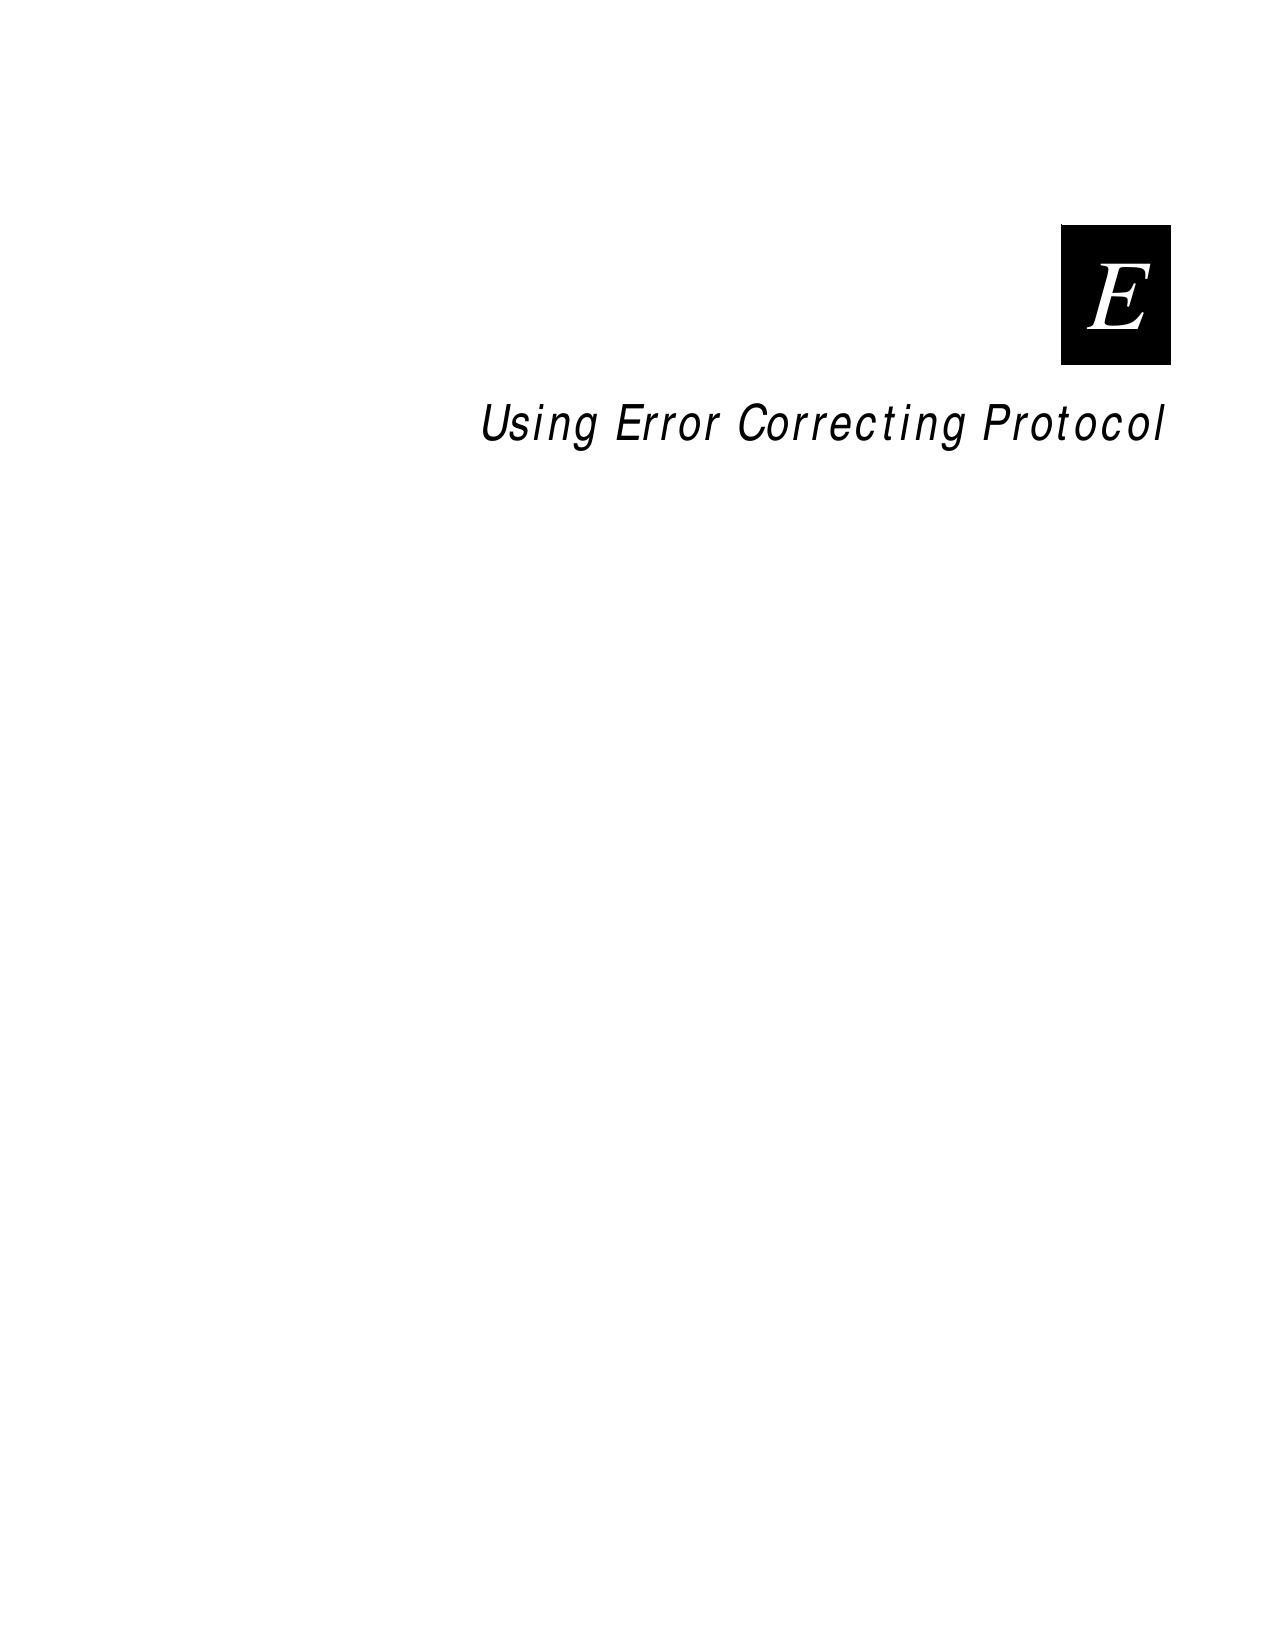  EUsing Error Correcting Protocol